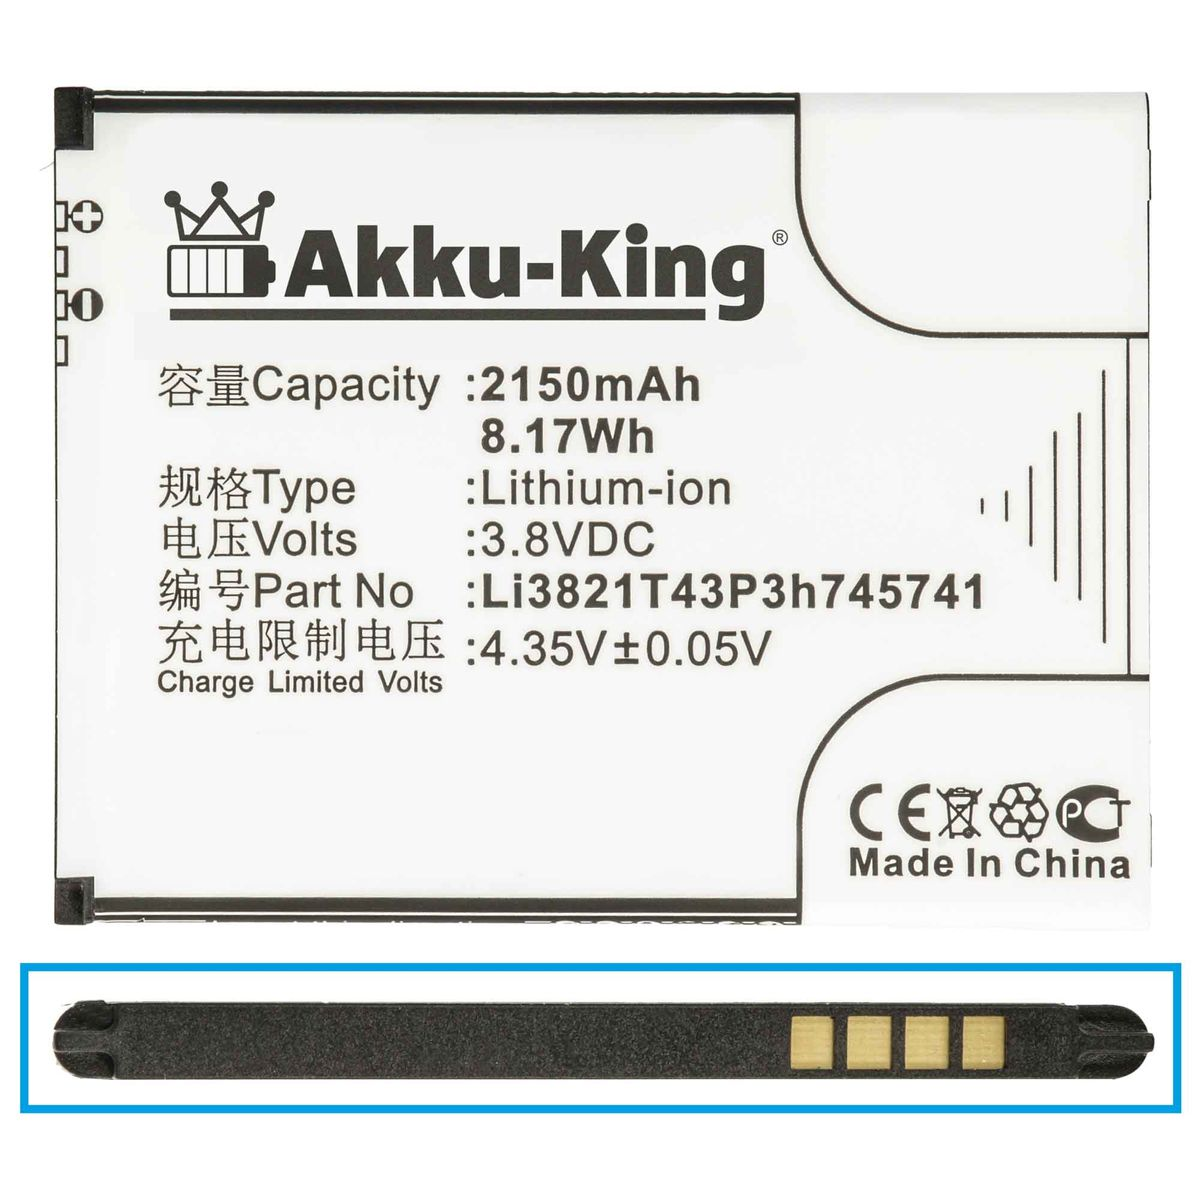 AKKU-KING Akku kompatibel mit ZTE Li-Ion 2150mAh 3.8 Li3821T43P3h745741 Volt, Handy-Akku